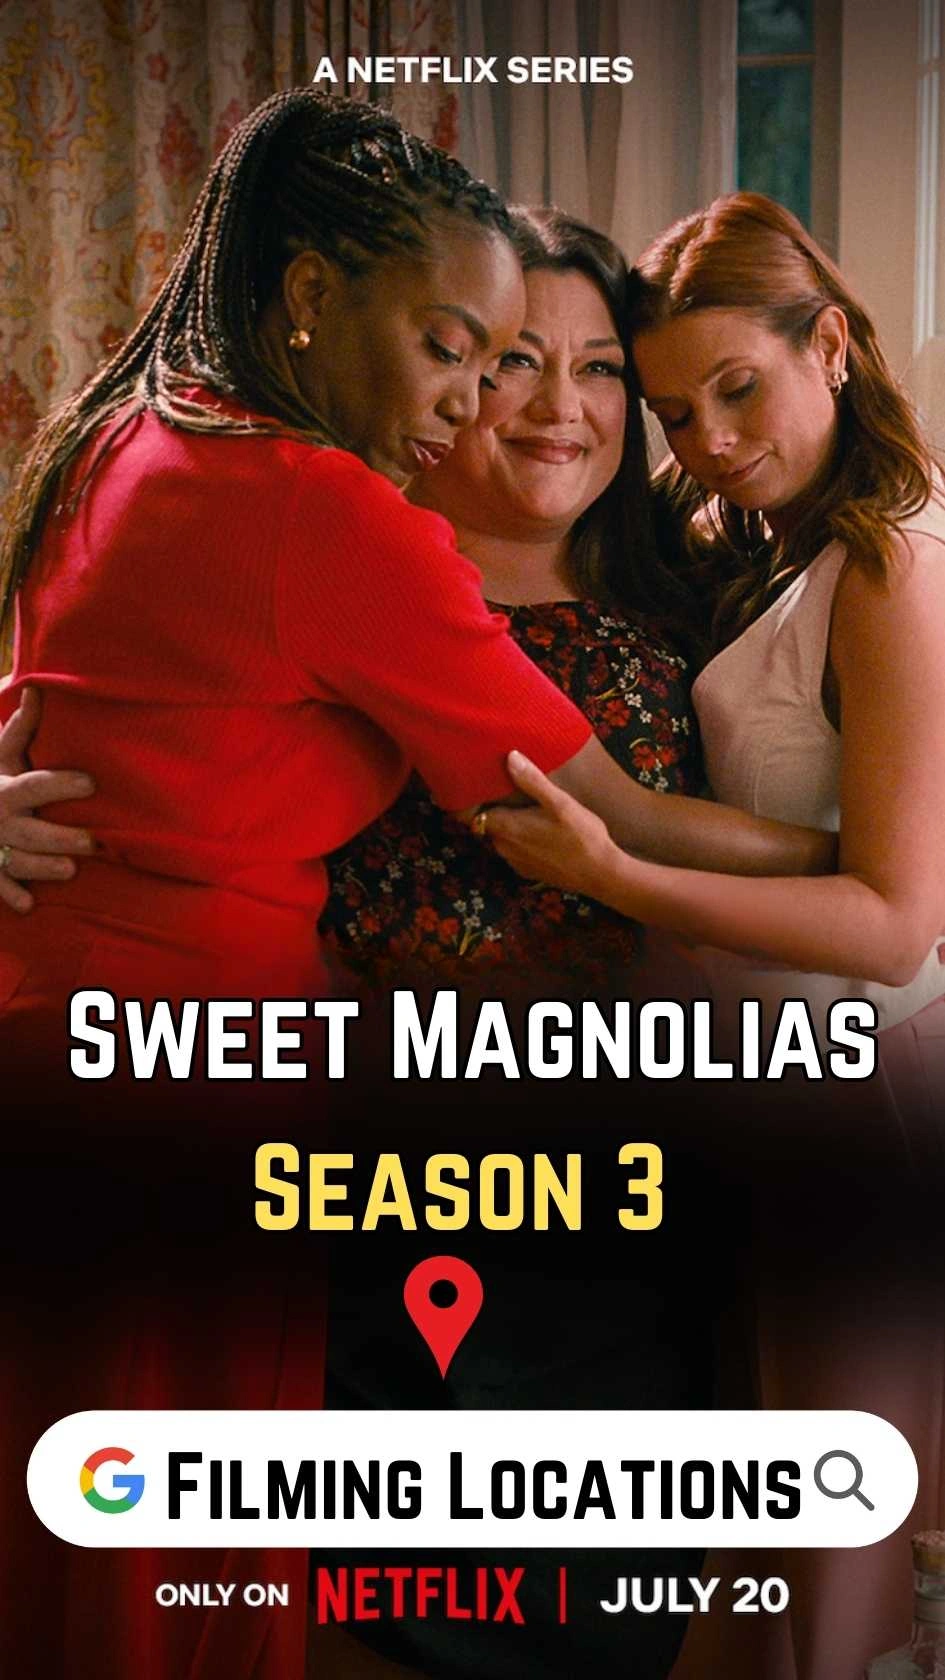 Sweet Magnolias Season 3 Filming Locations